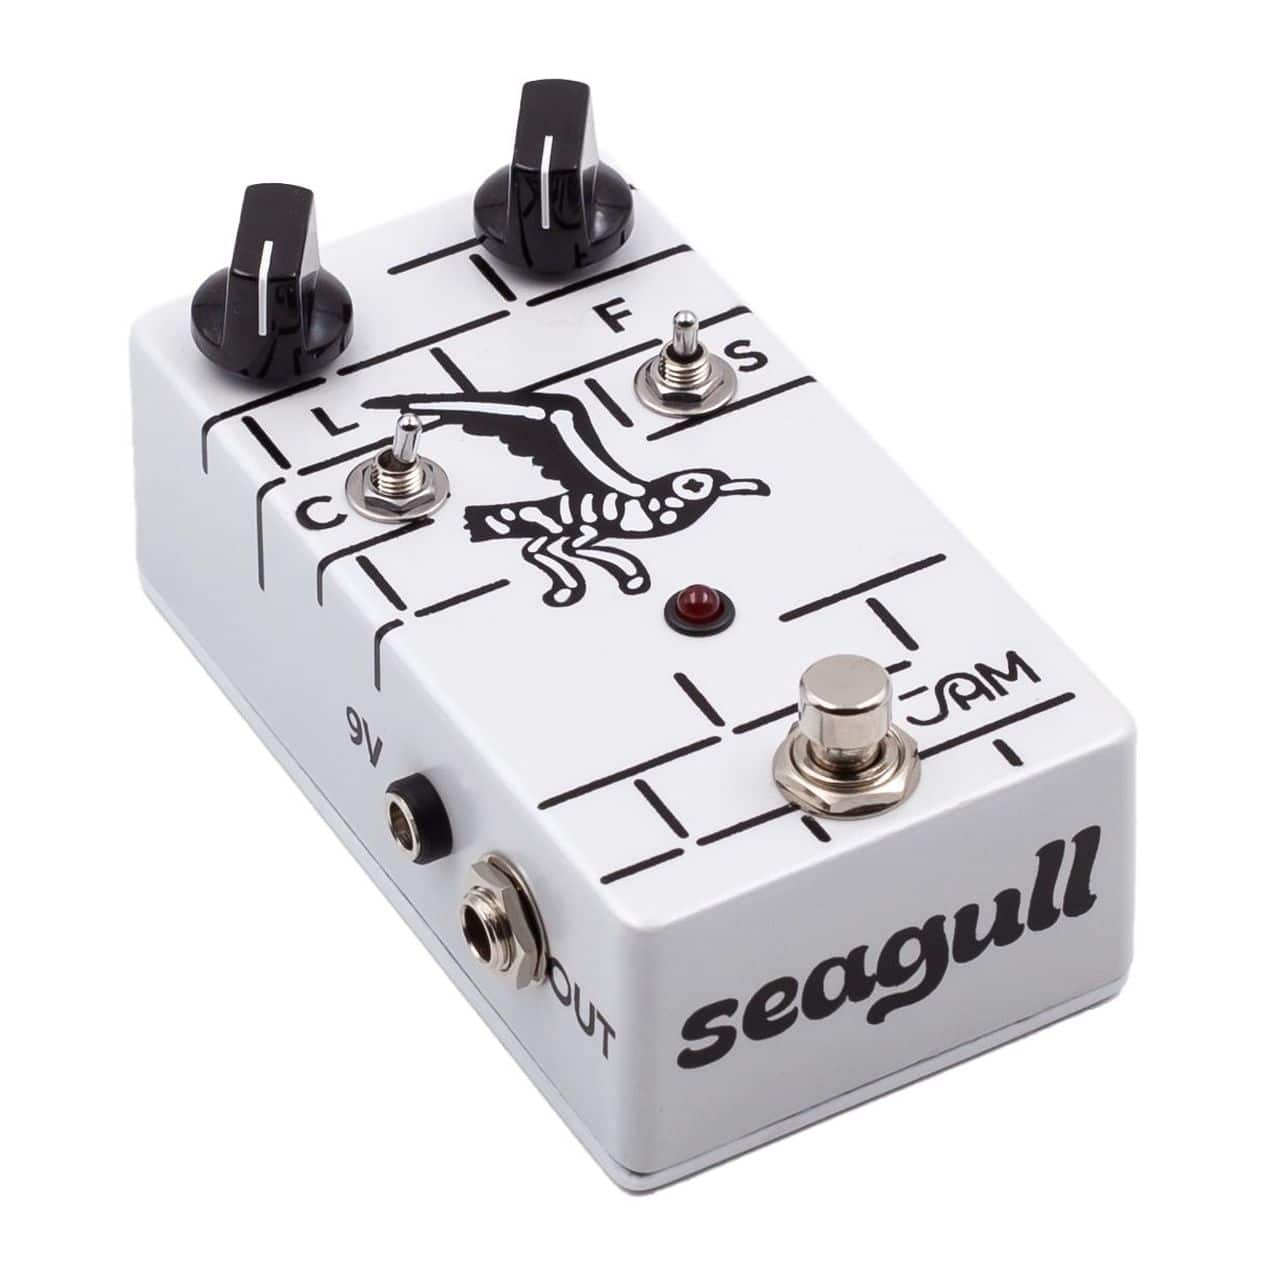 Seagull (new) Whitebg 02